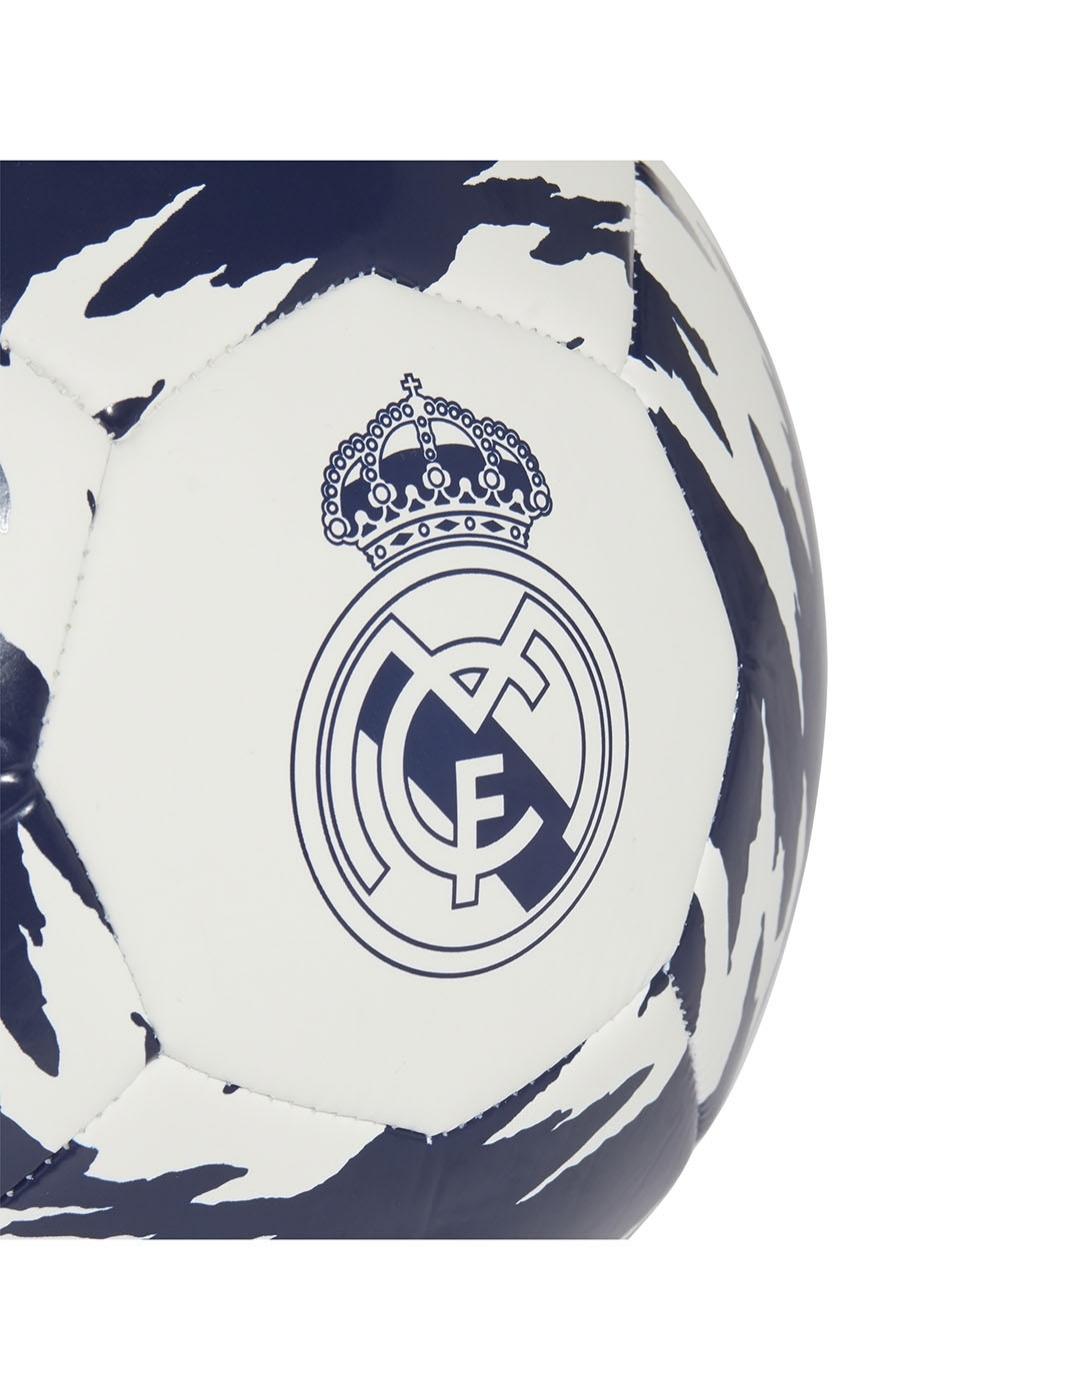 Balón Real Madrid - Blanco adidas